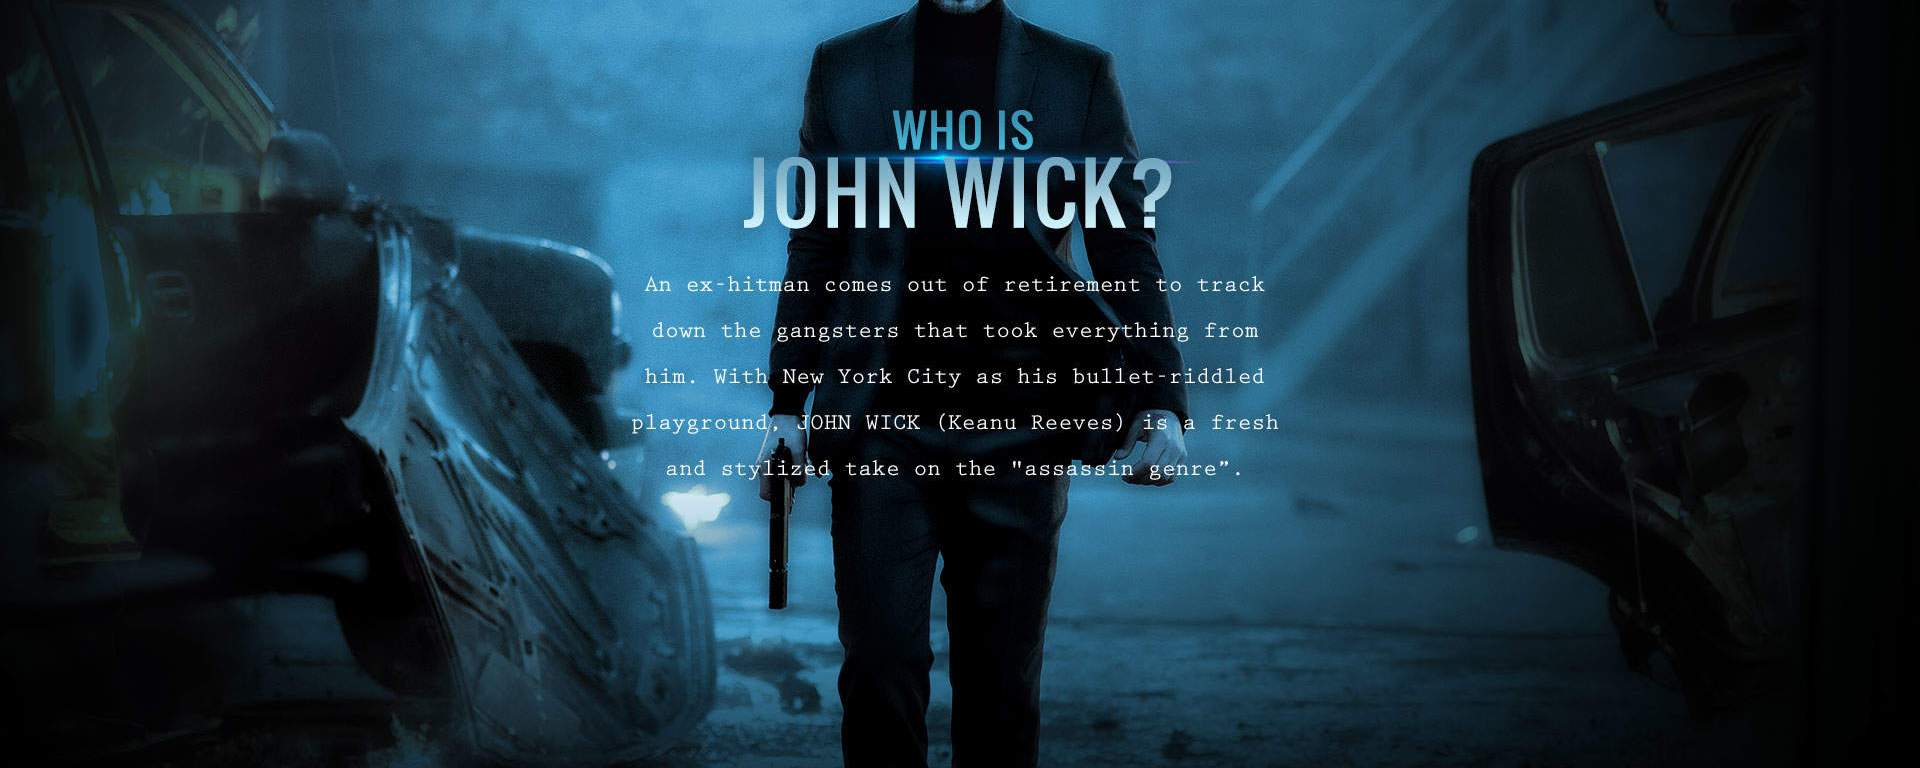 Rob's Car Movie Review: John Wick (2014)